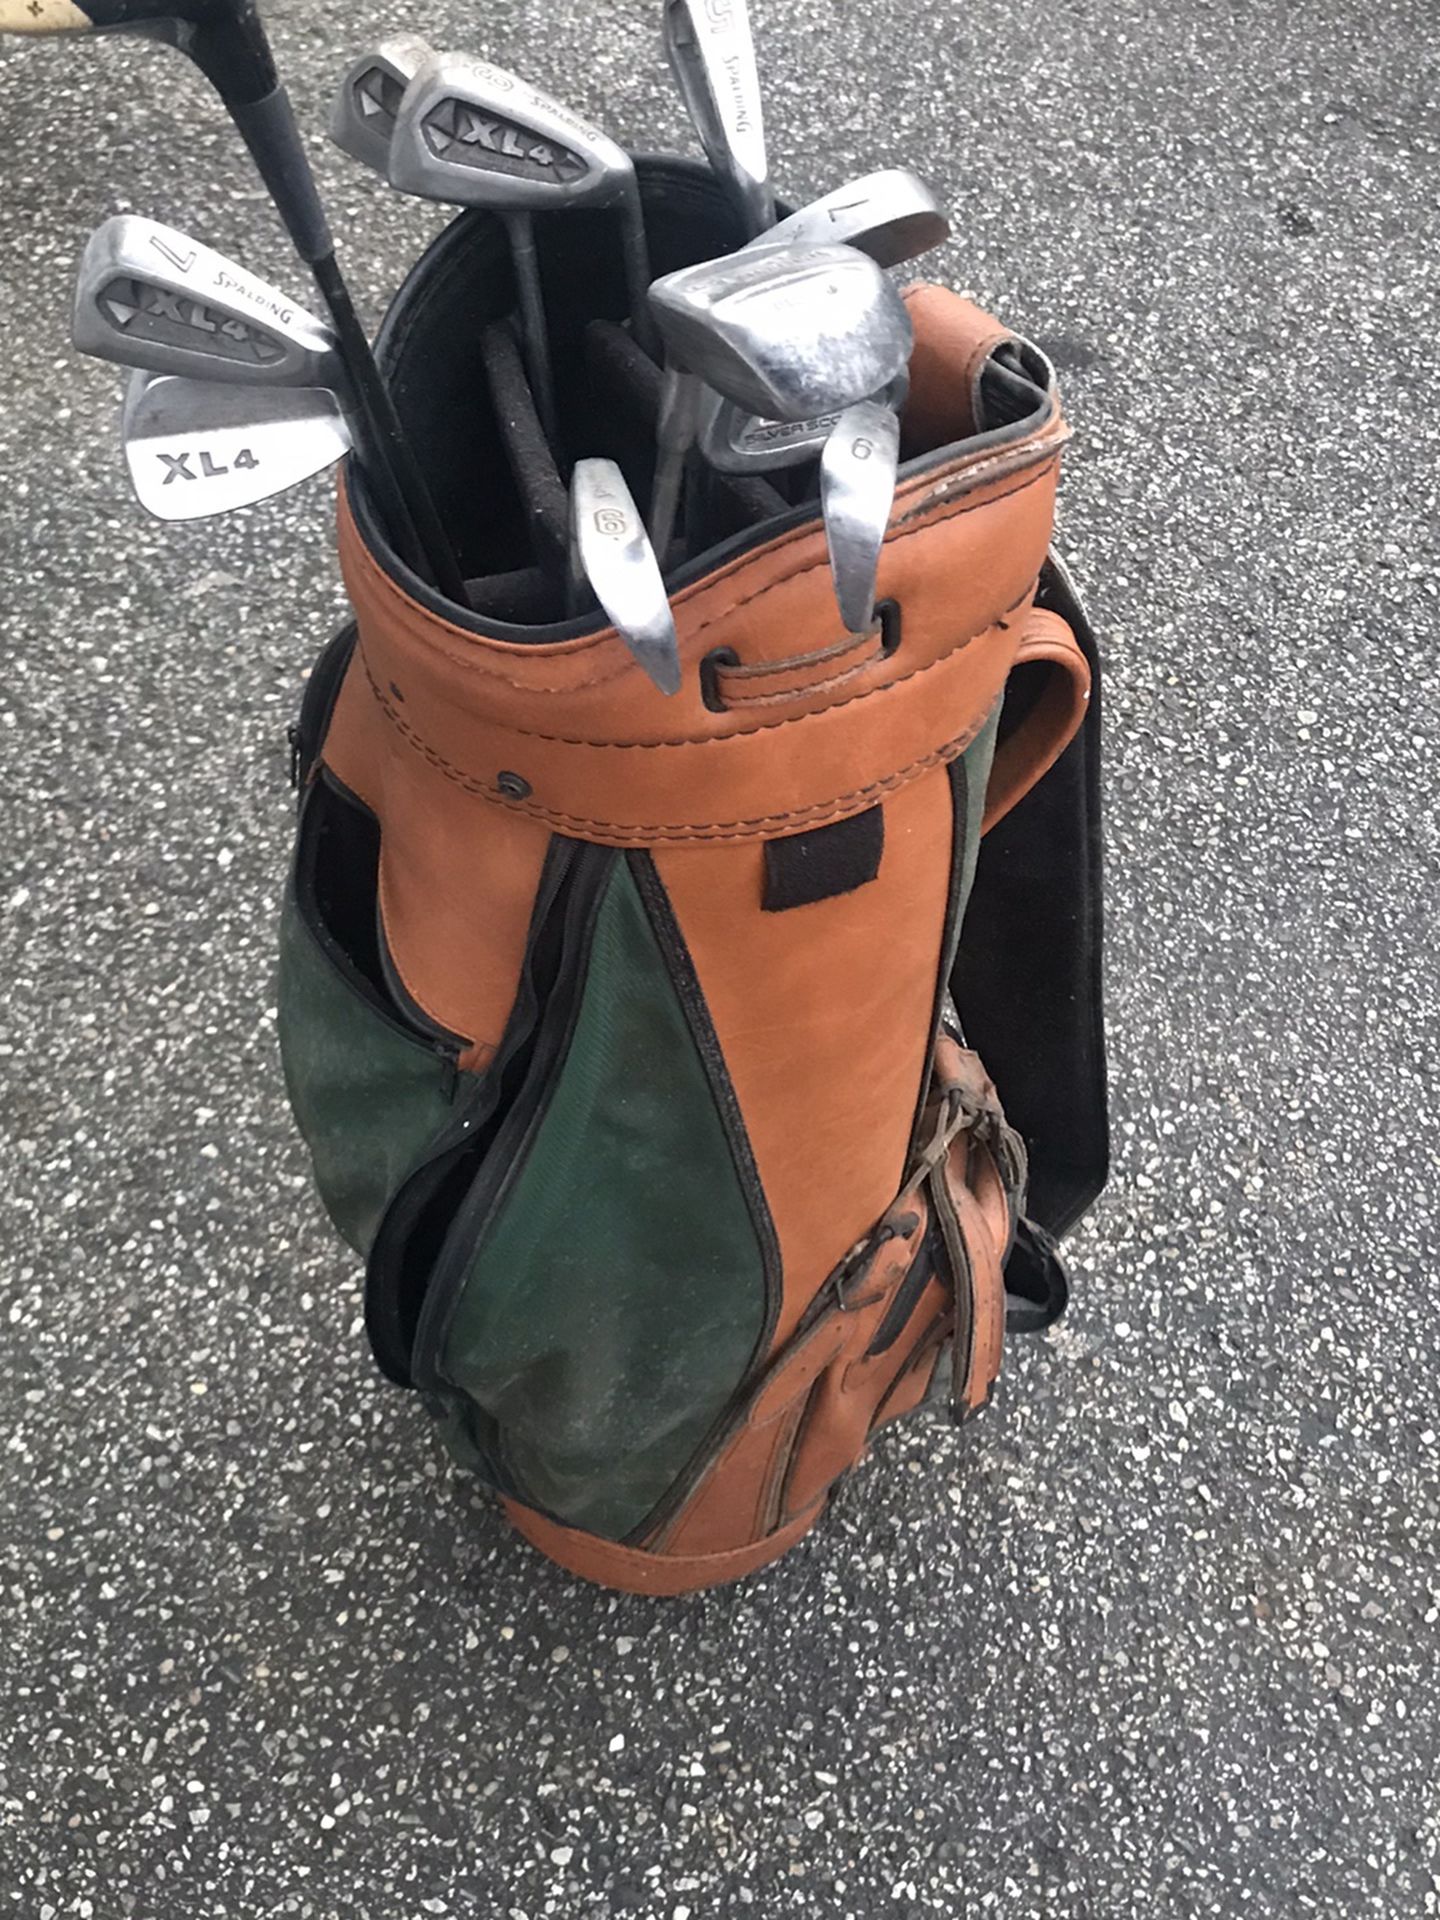 Callaway Golf Bag Set